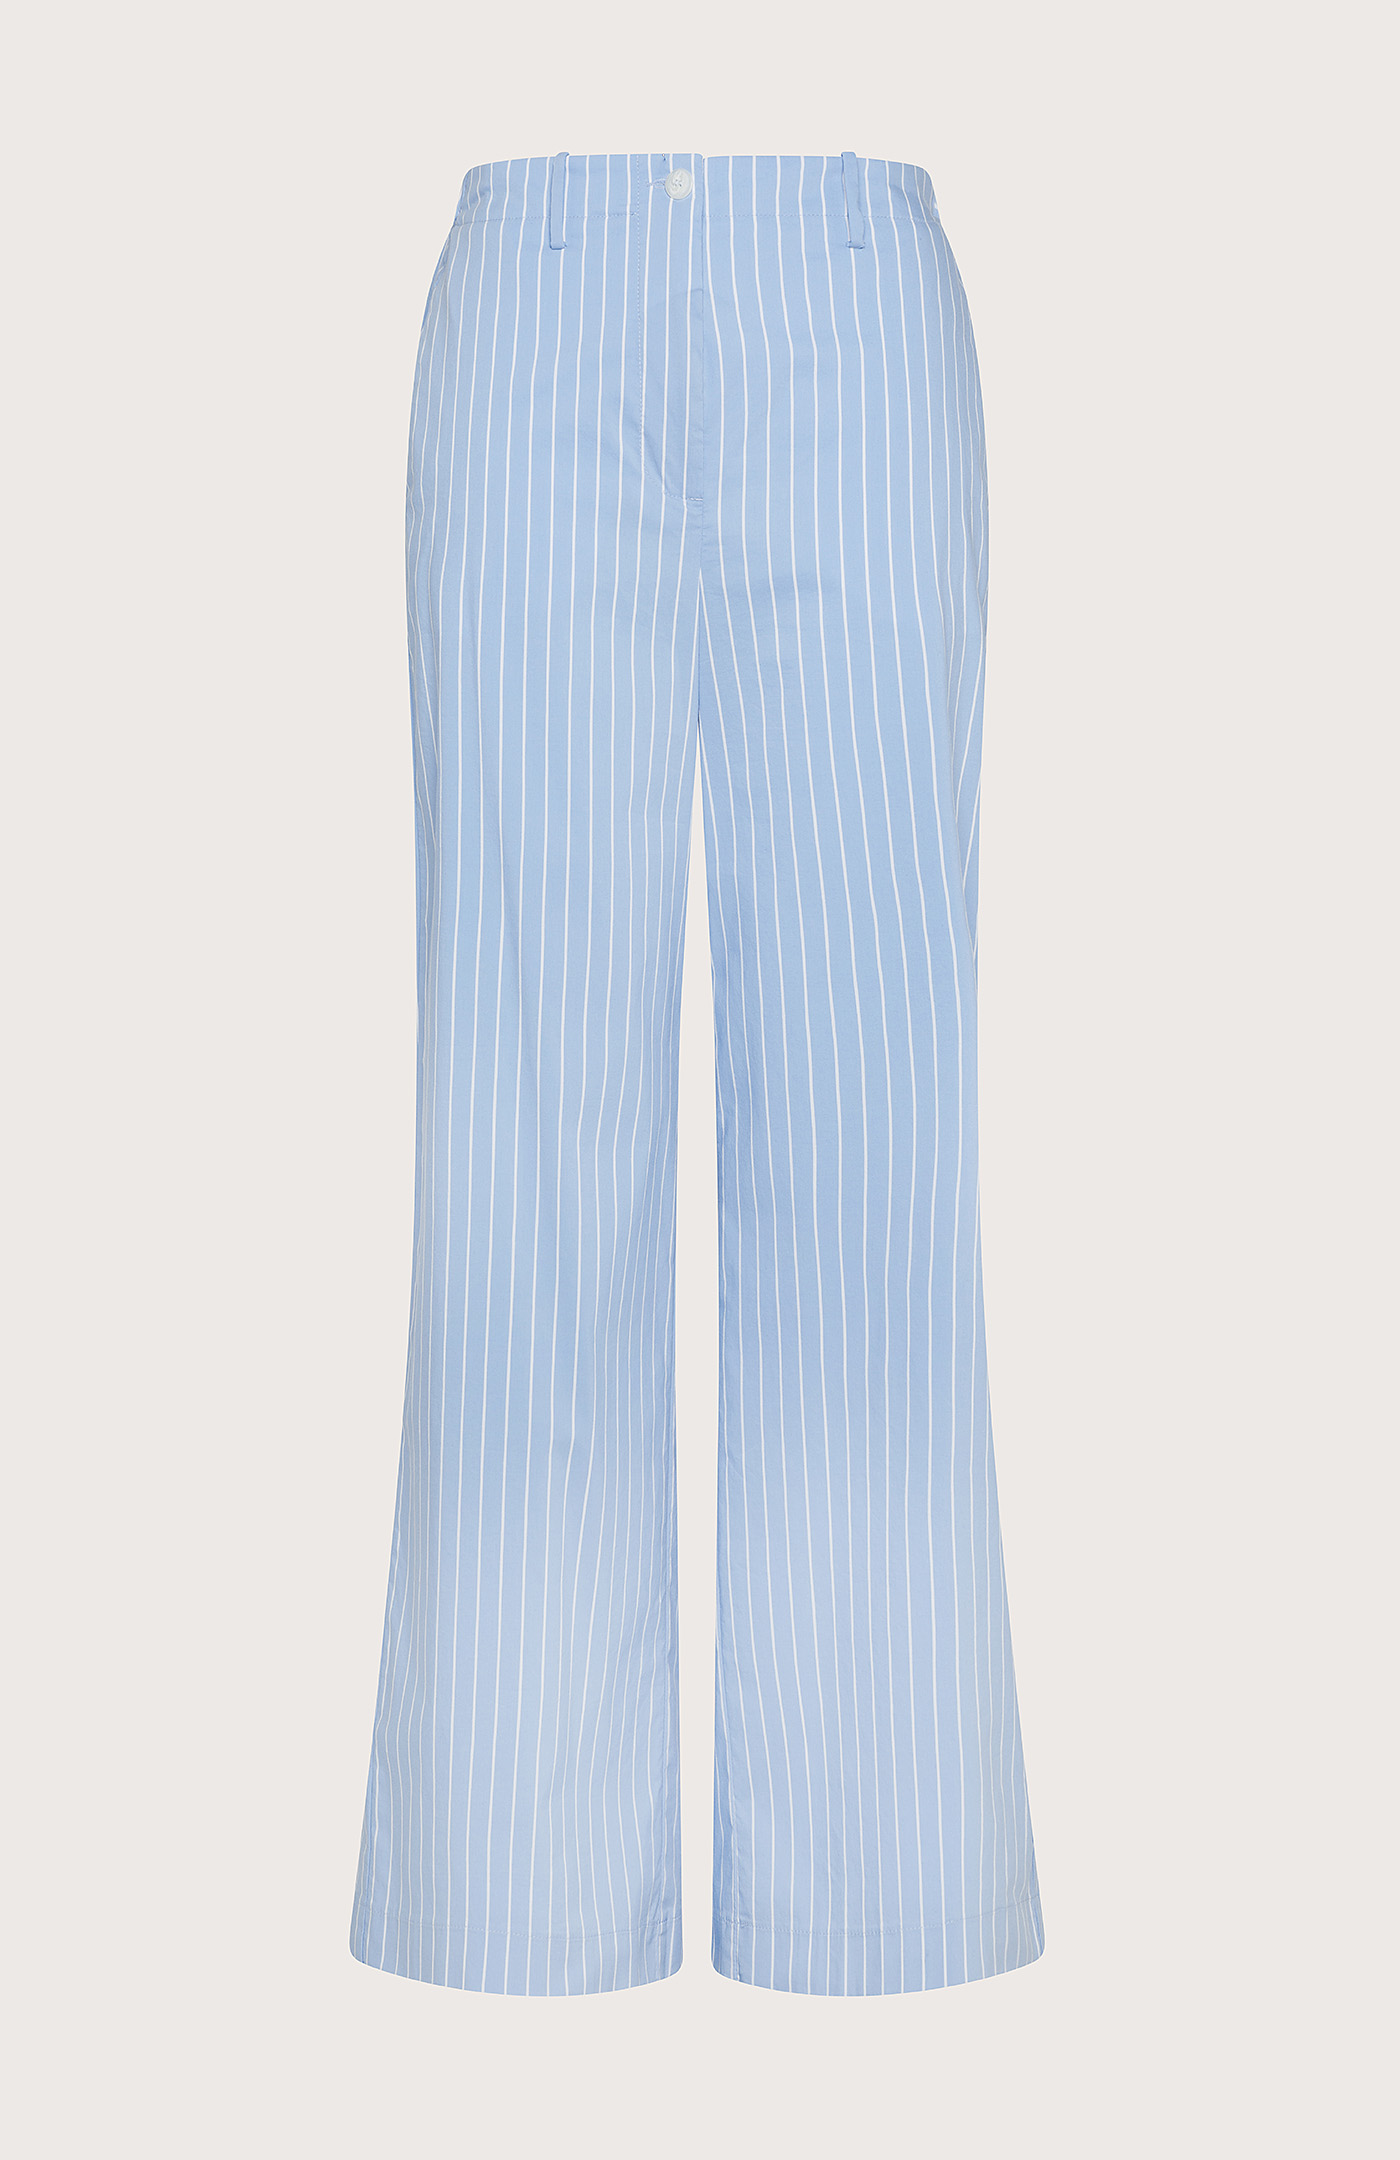 Devon Flat Front Stretch Wool Trouser in Medium Grey, Size 38 (Modern